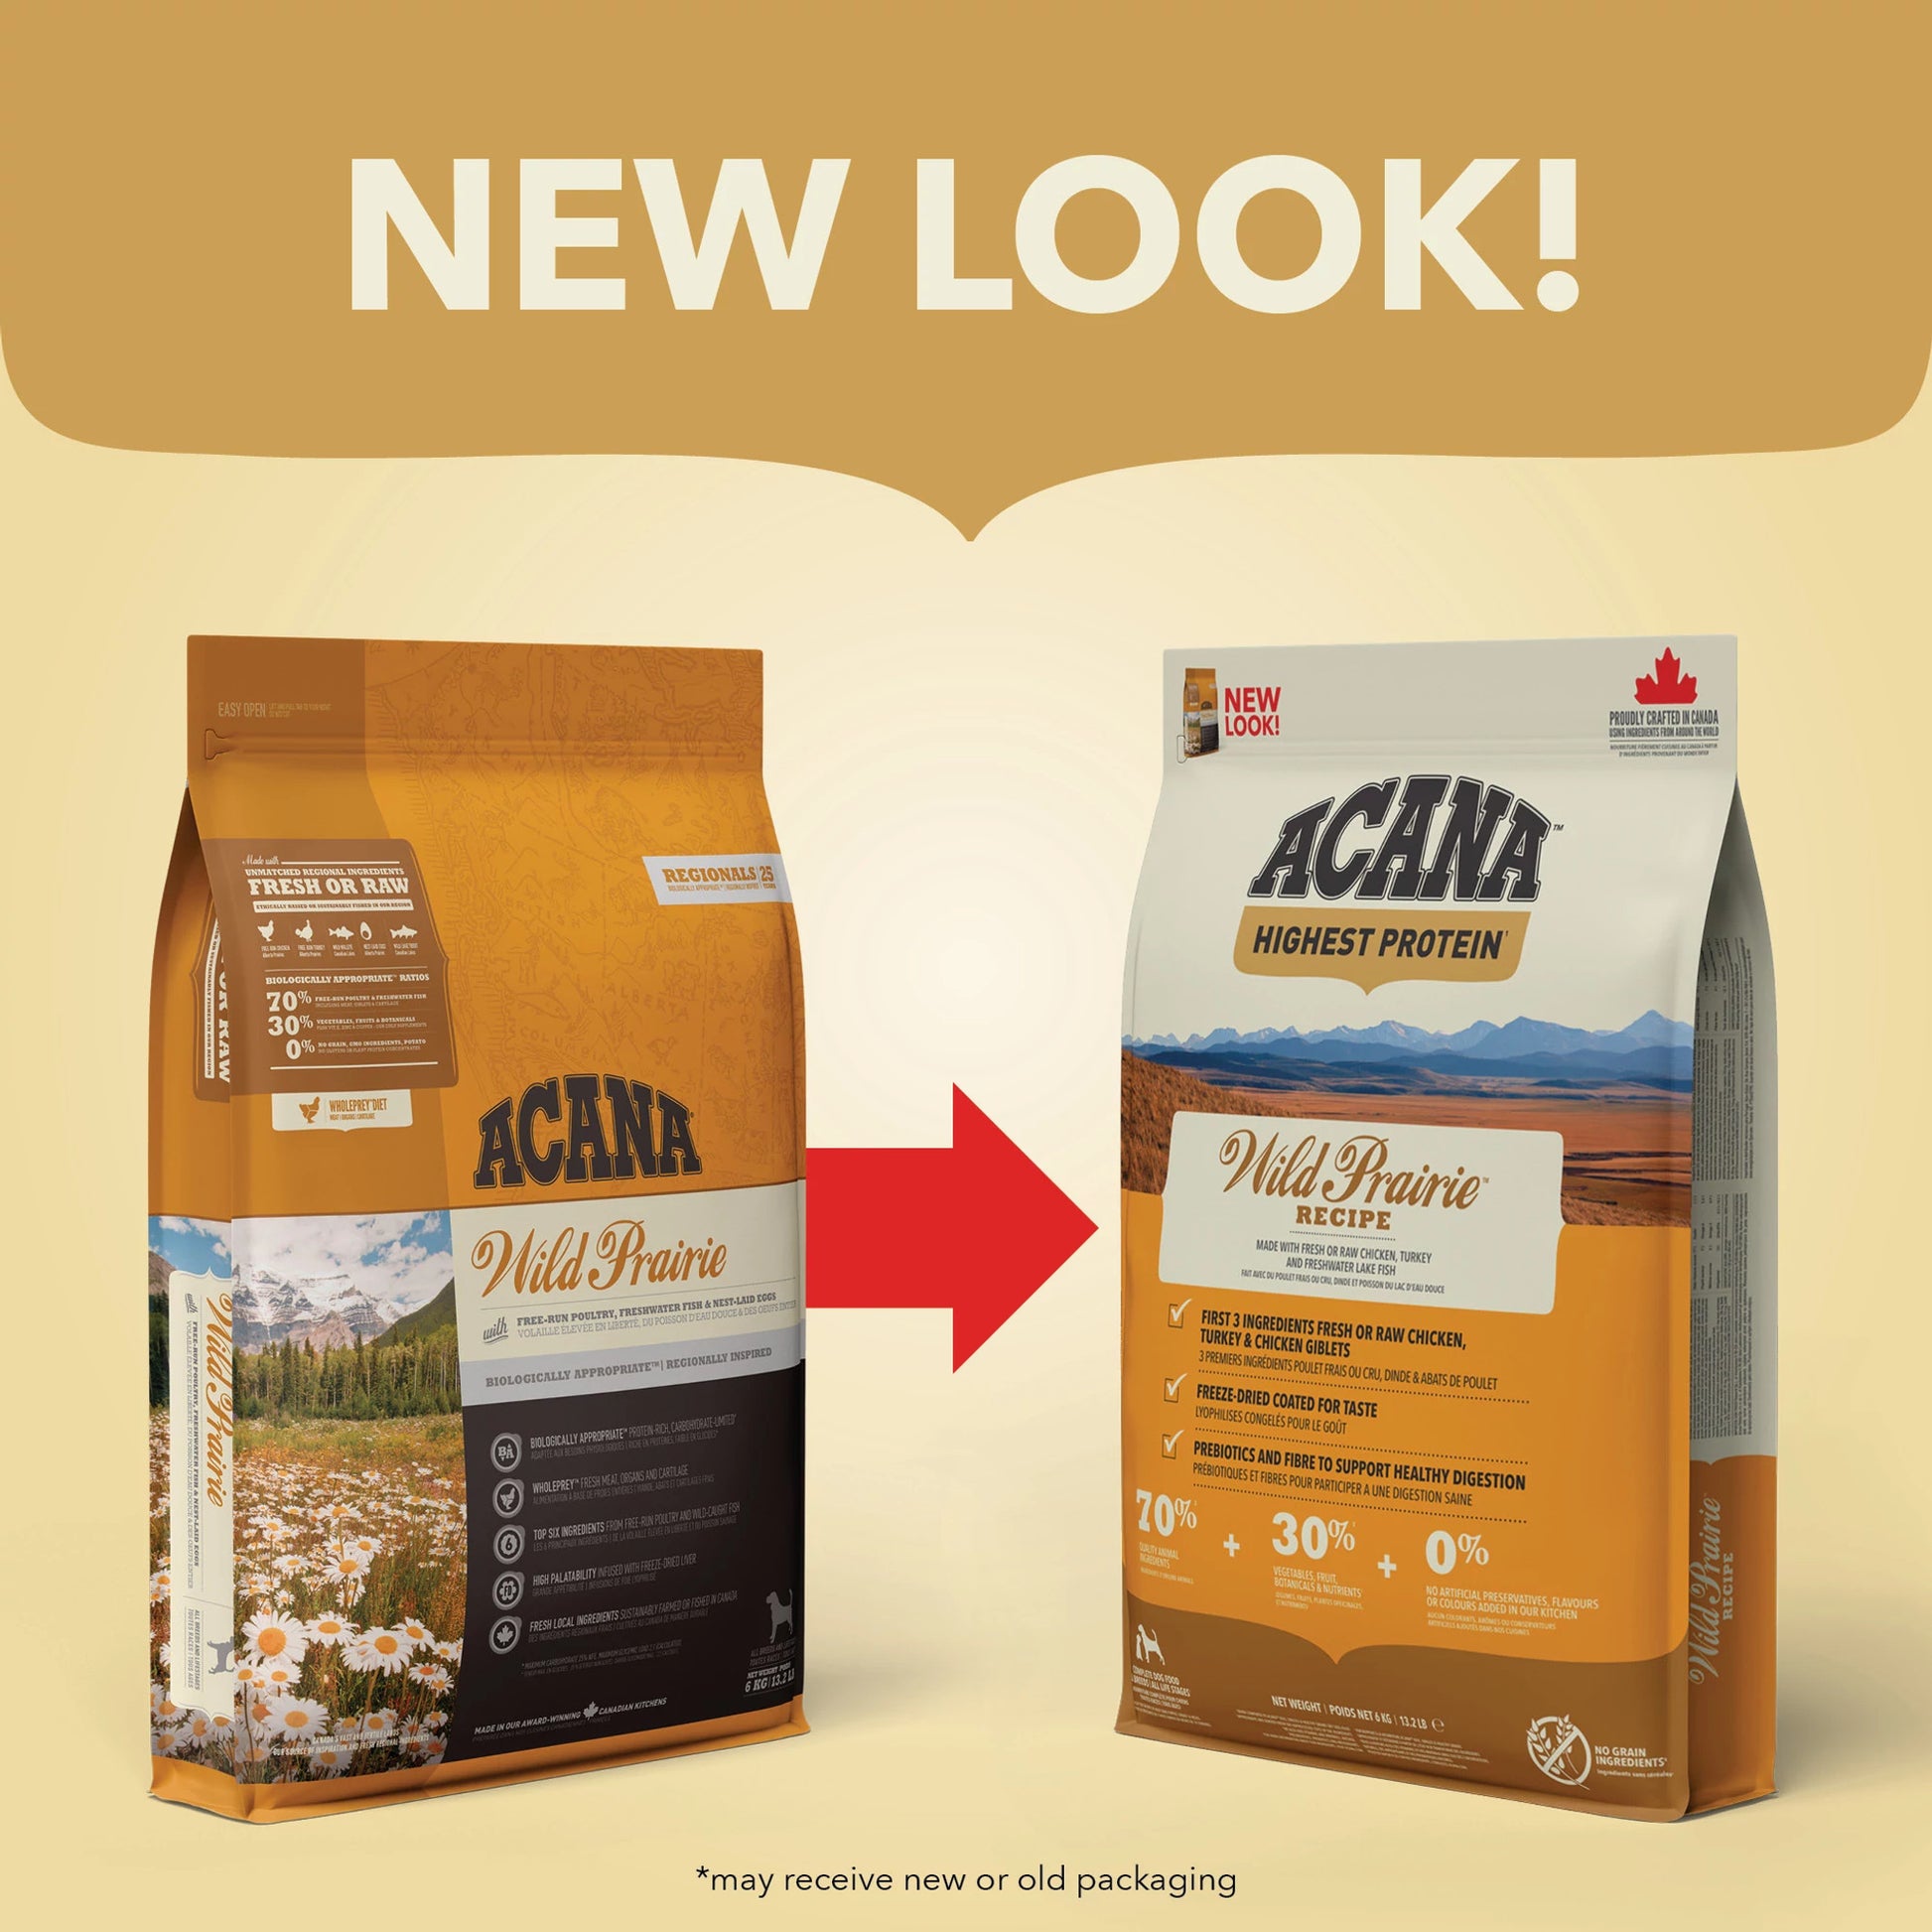 Acana Highest Protein Wild Prairie Dry Dog Food Recipe  Cat Food  | PetMax Canada